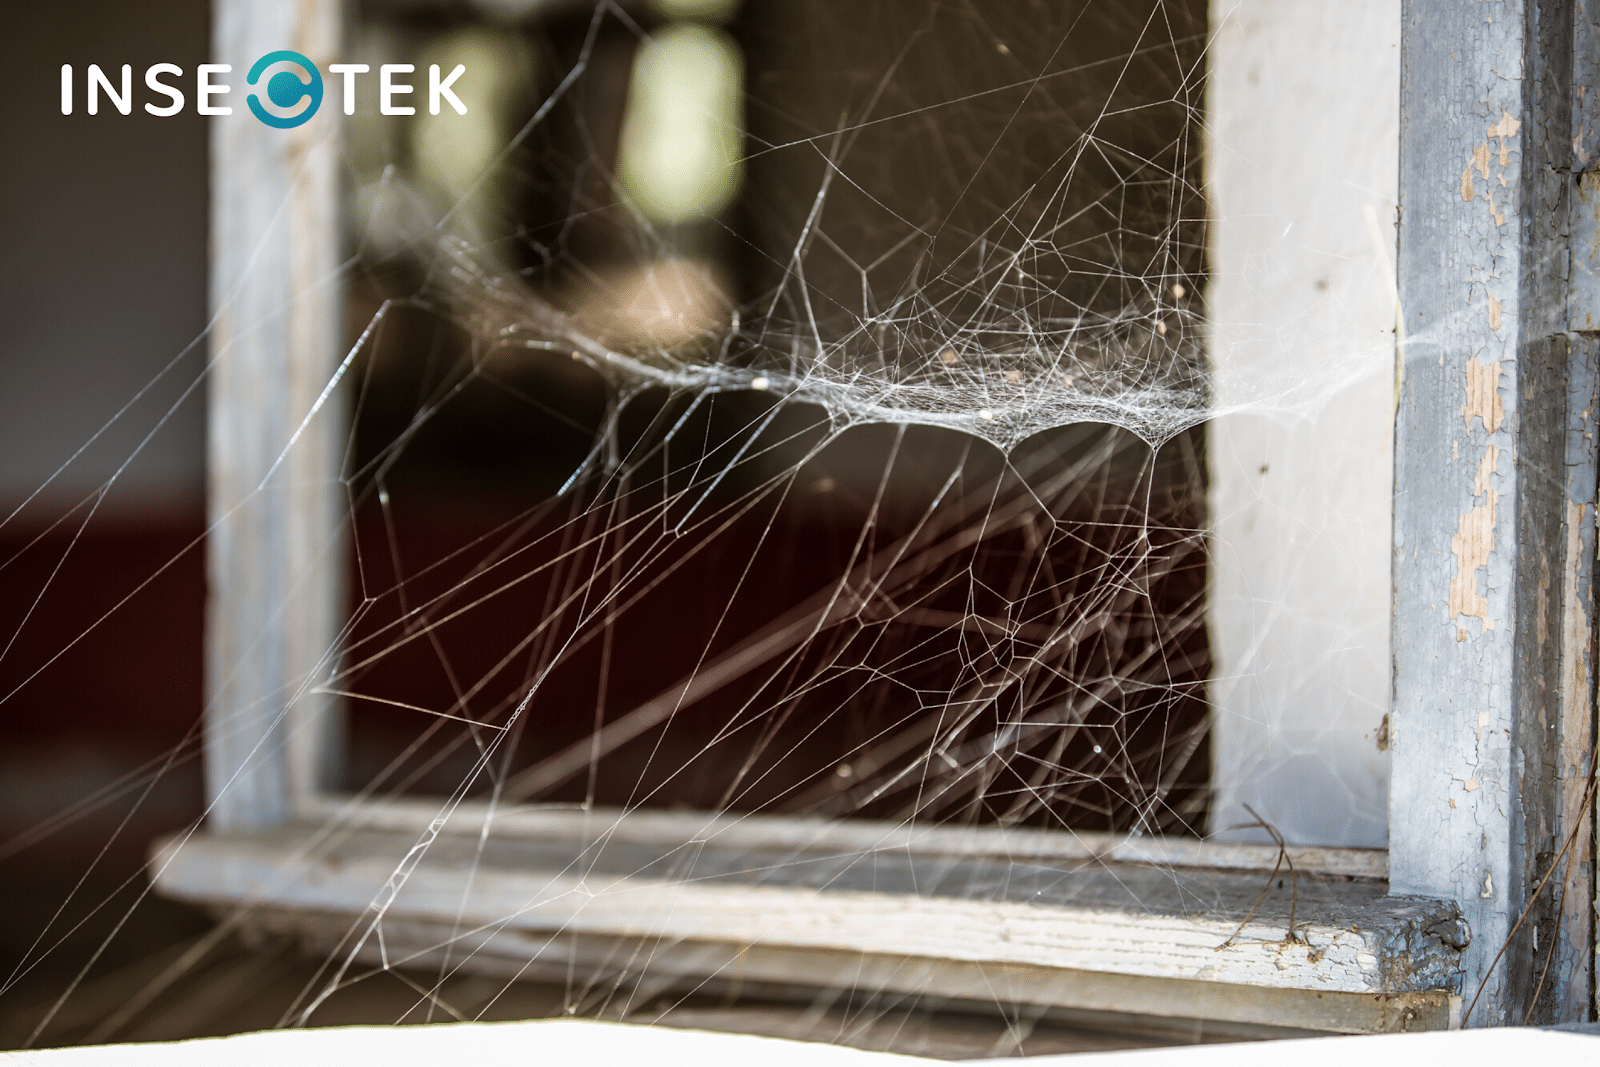 Spider webs in a window sill